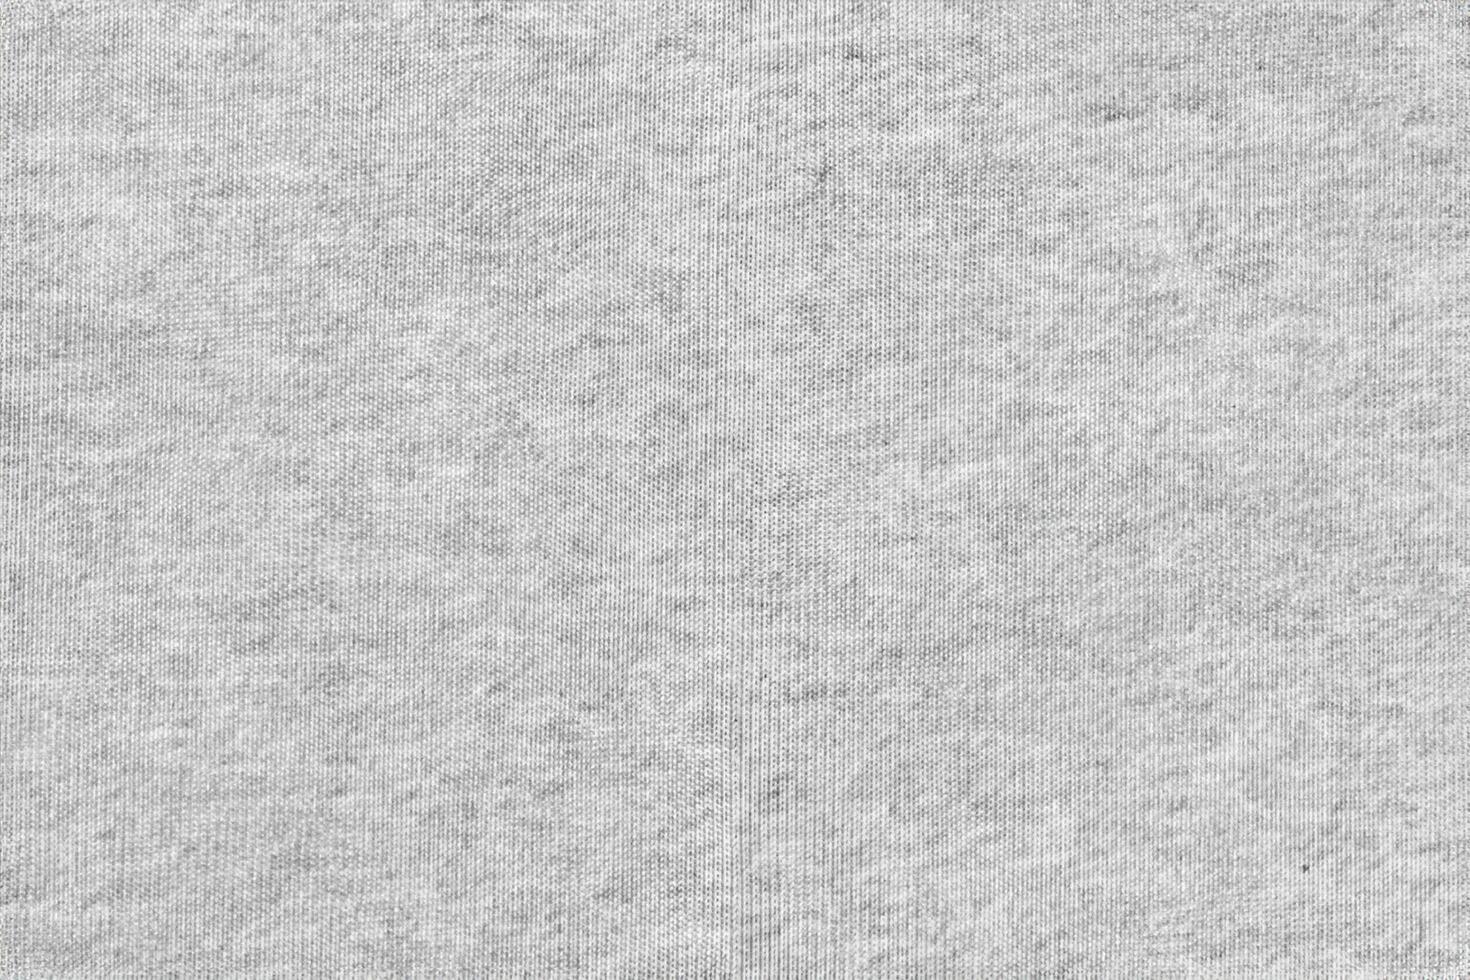 ljung grå tröja stickat sidfot tyg textur foto